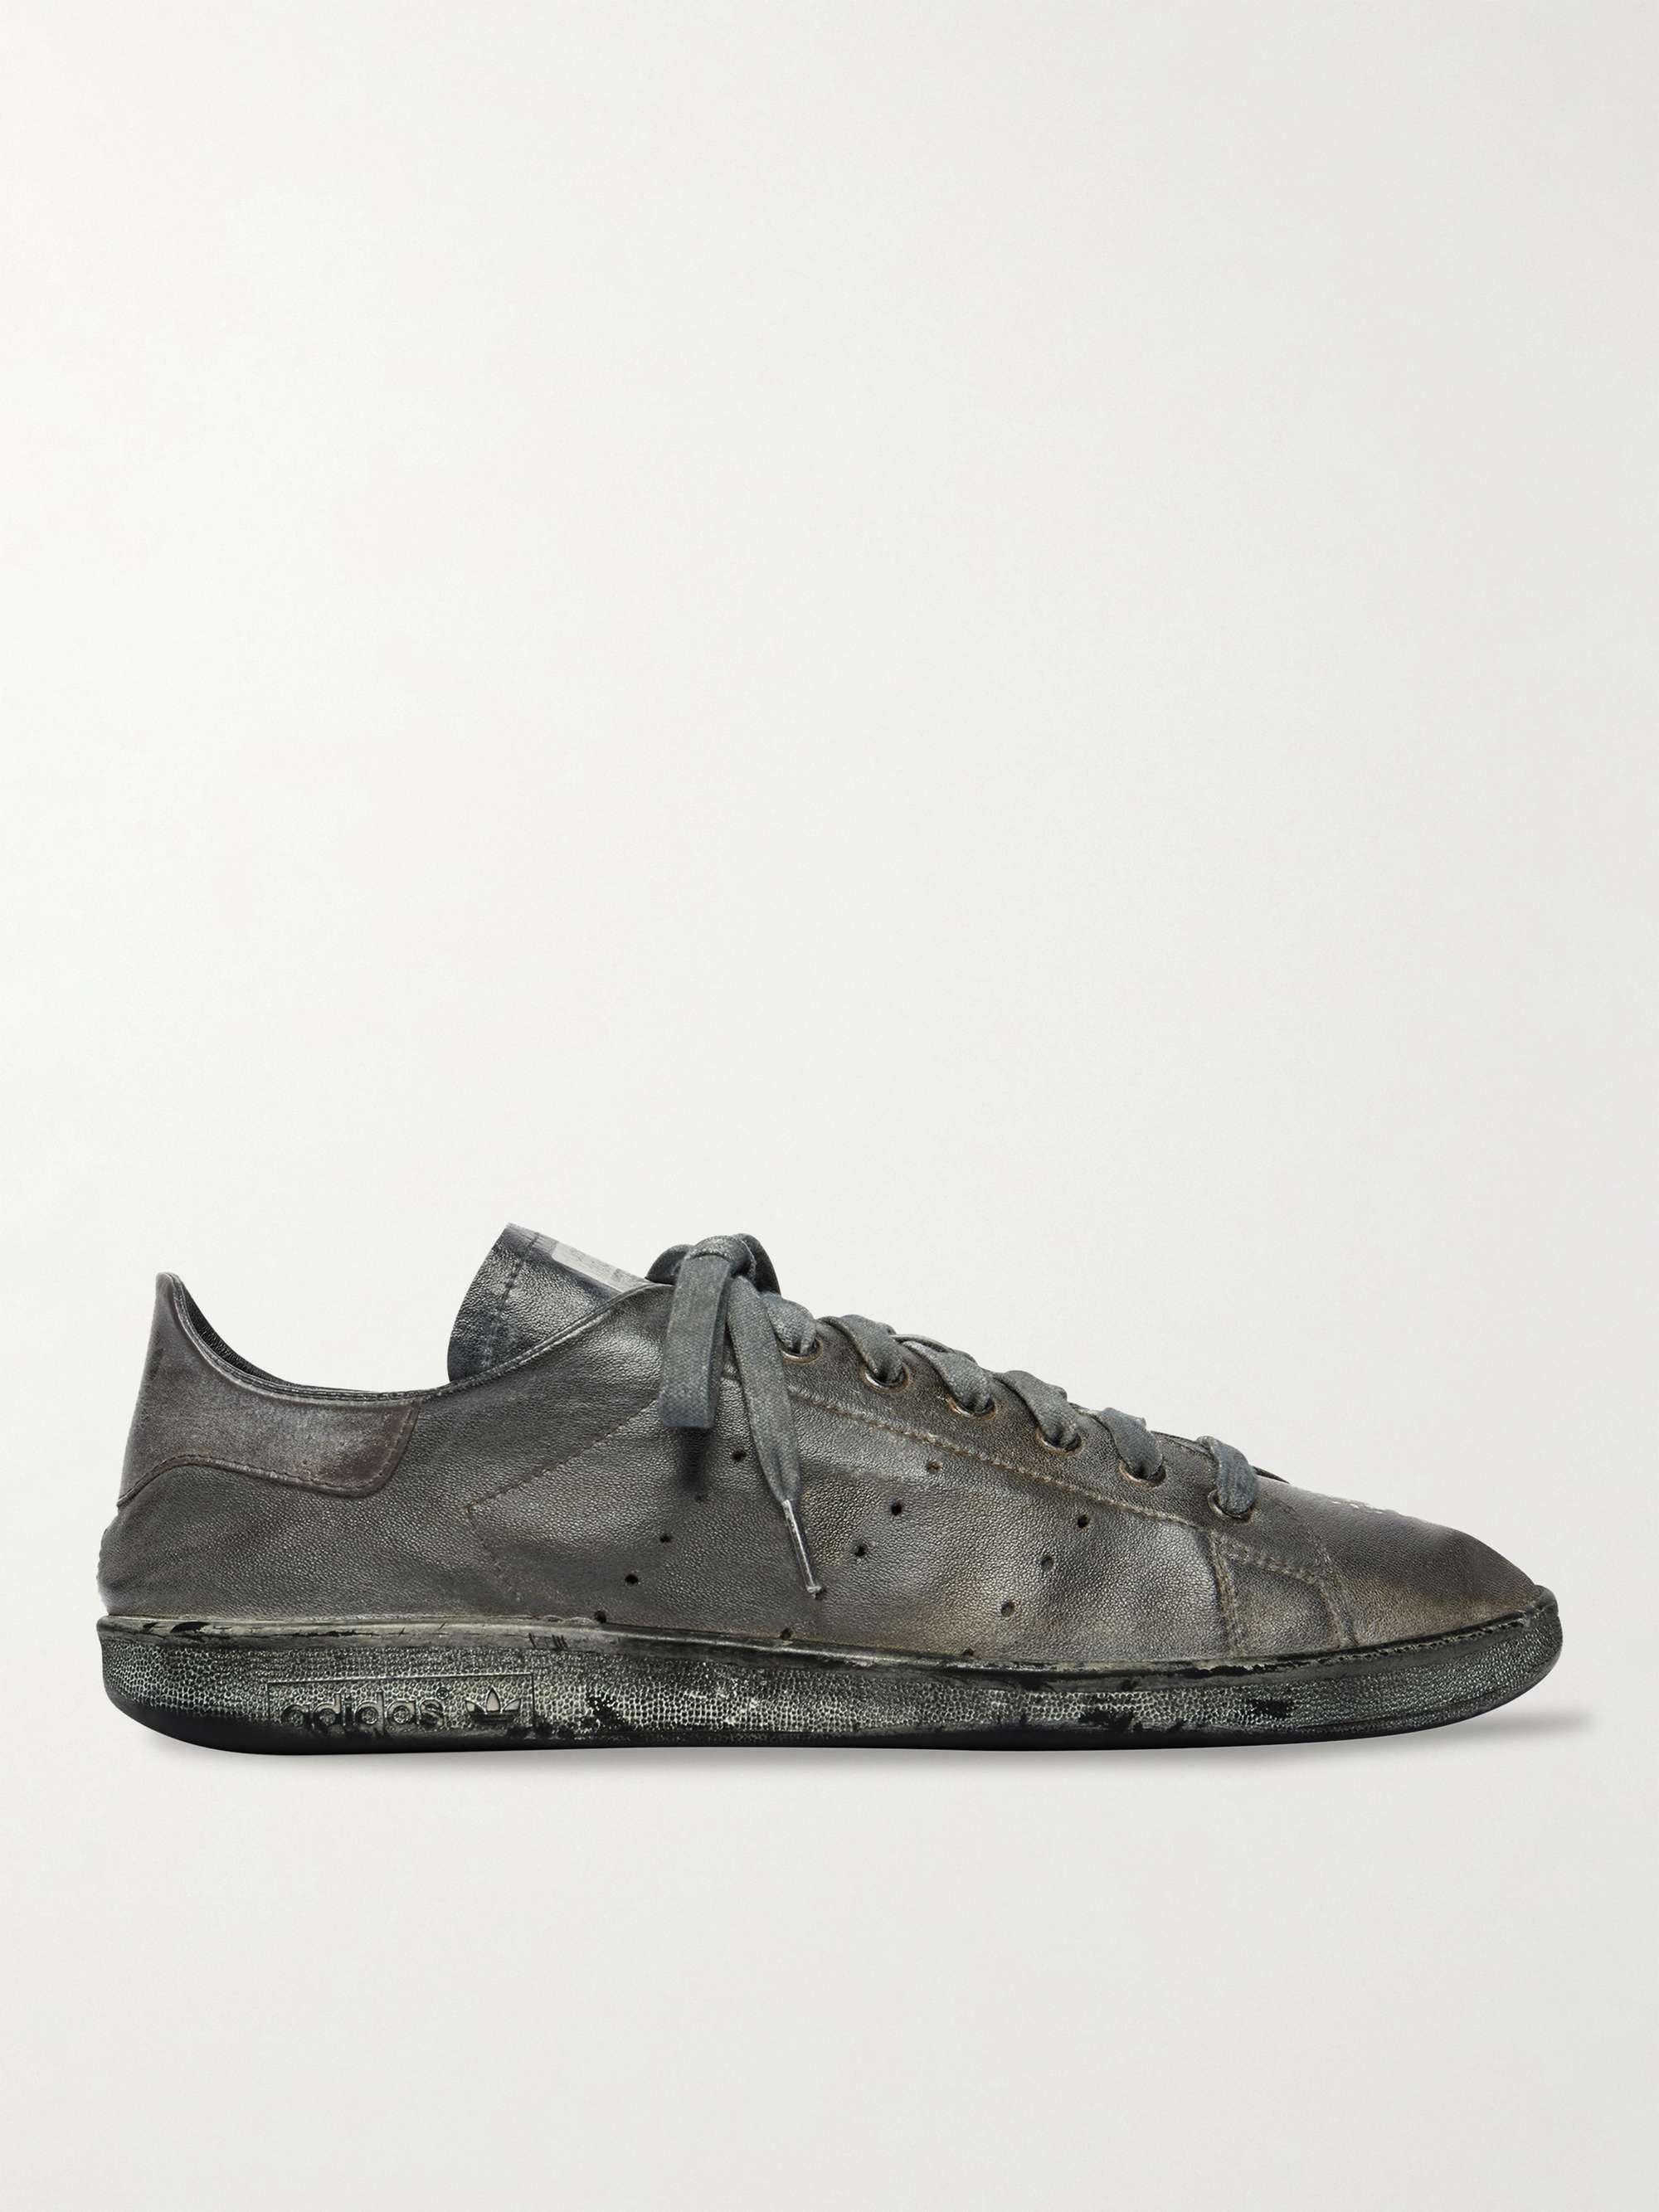 BALENCIAGA + adidas Stan Smith Distressed Leather Sneakers for Men | MR  PORTER